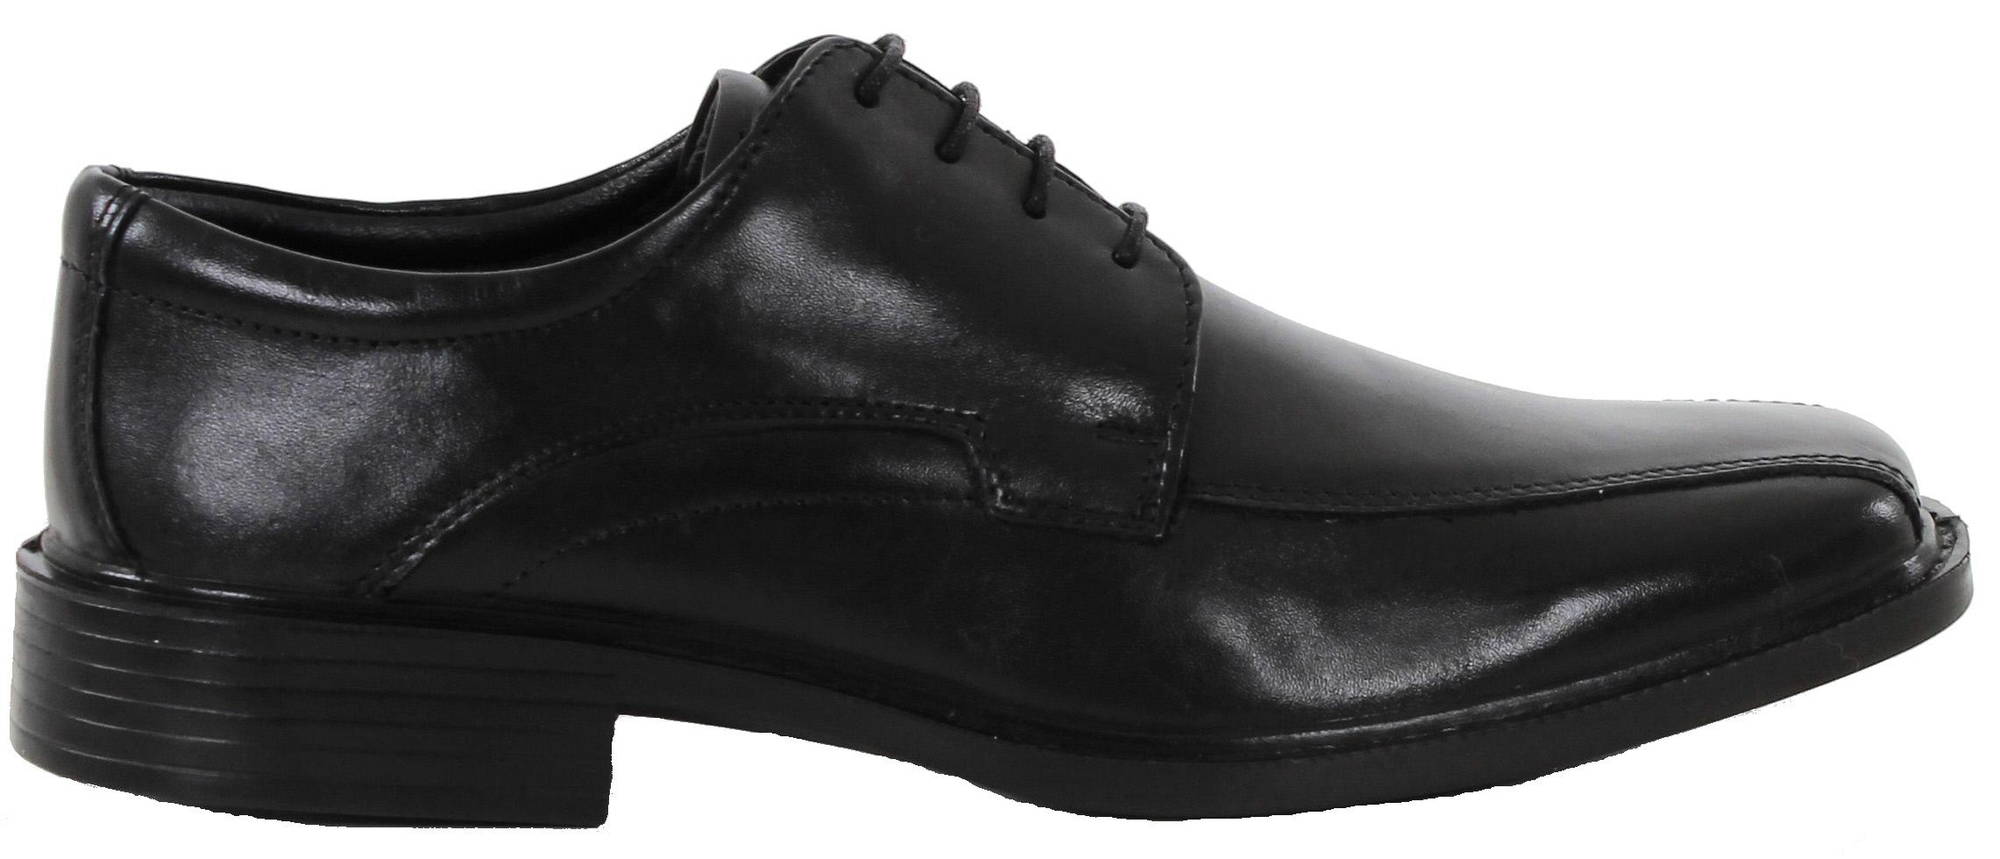 Senator Walking Shoes 458-2128 black - Stilettoshop.eu webstore